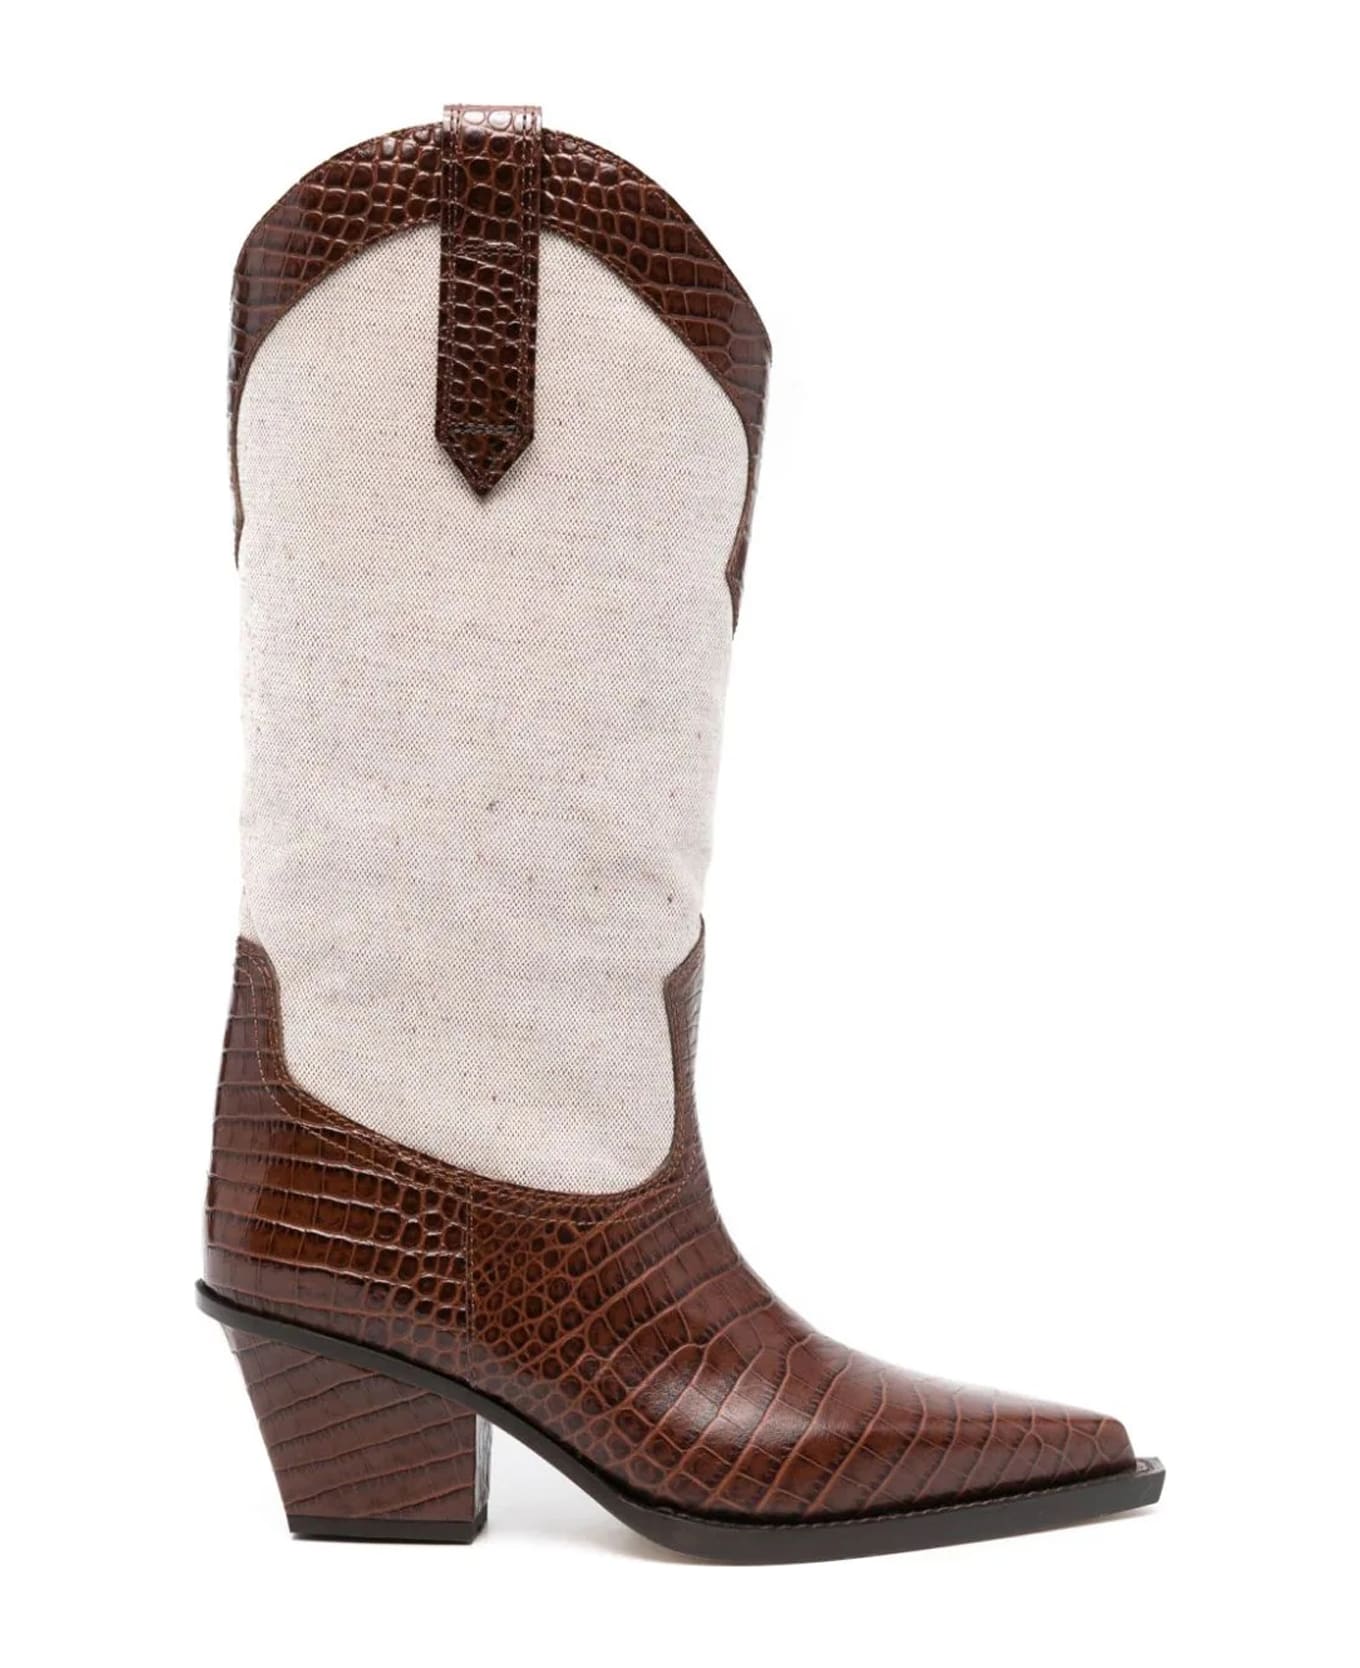 Paris Texas Boots - Brown